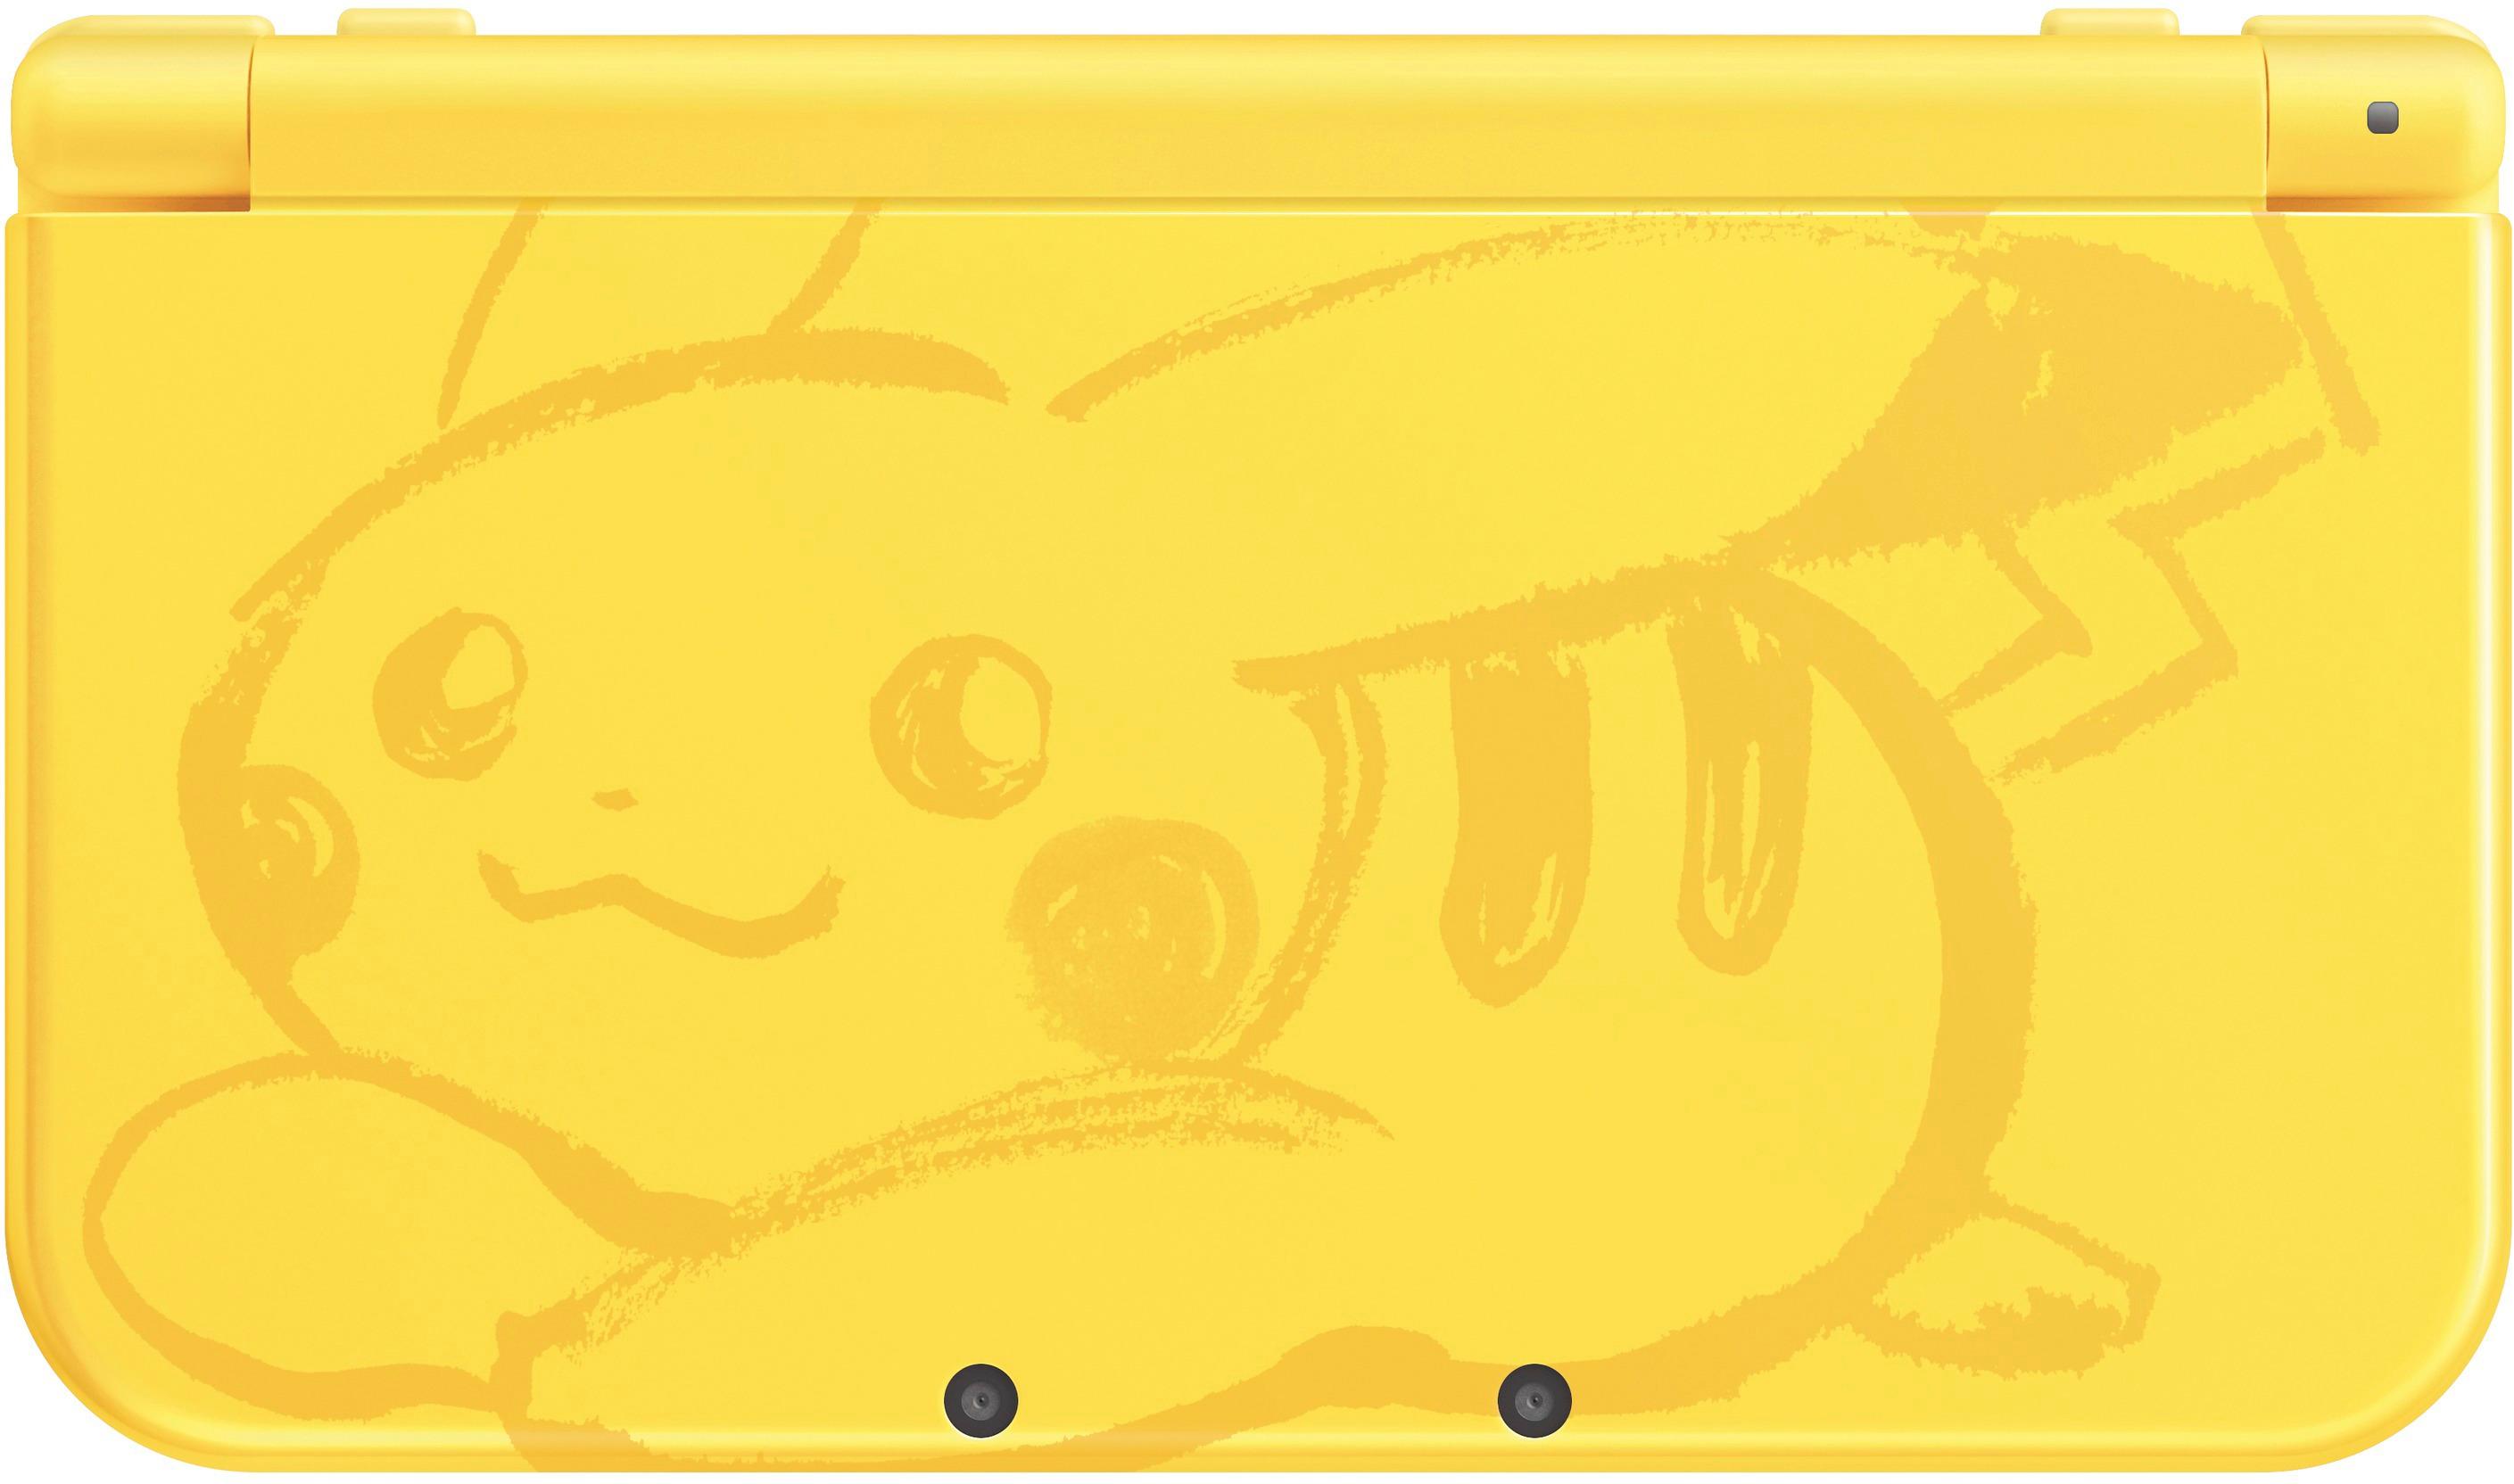 pikachu new 3ds